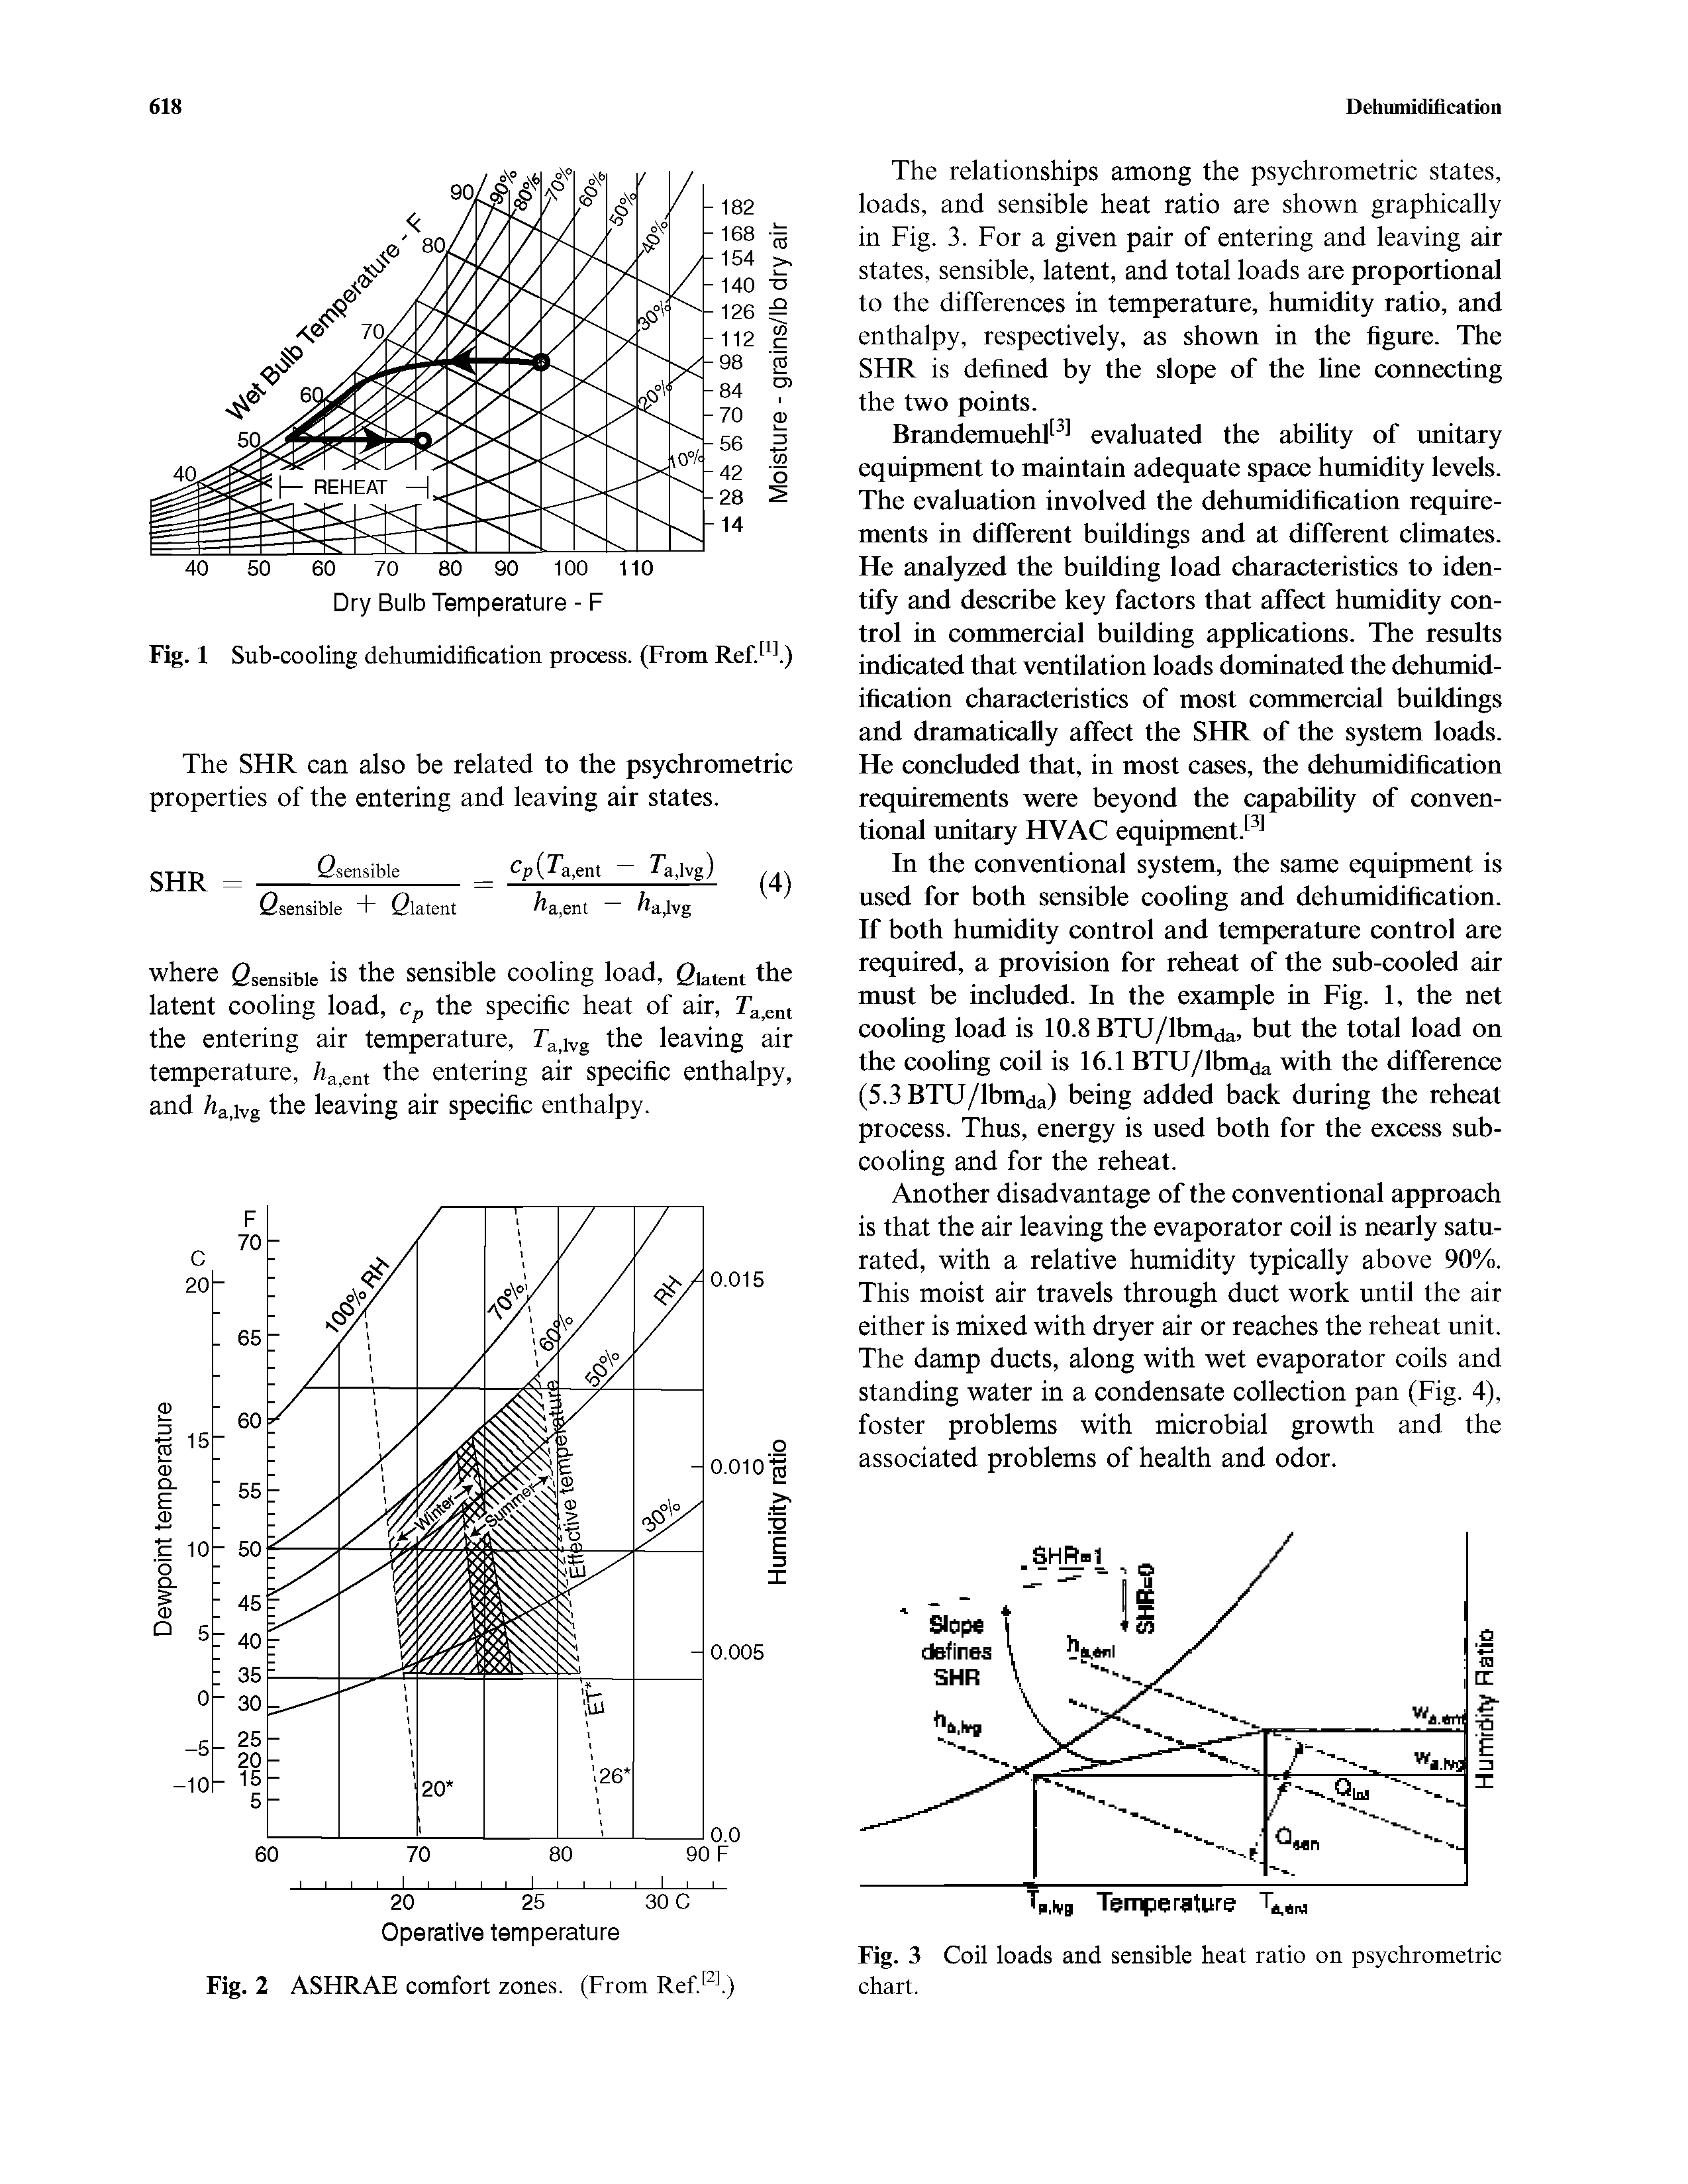 Fig. 3 Coil loads and sensible heat ratio on psychrometric chart.